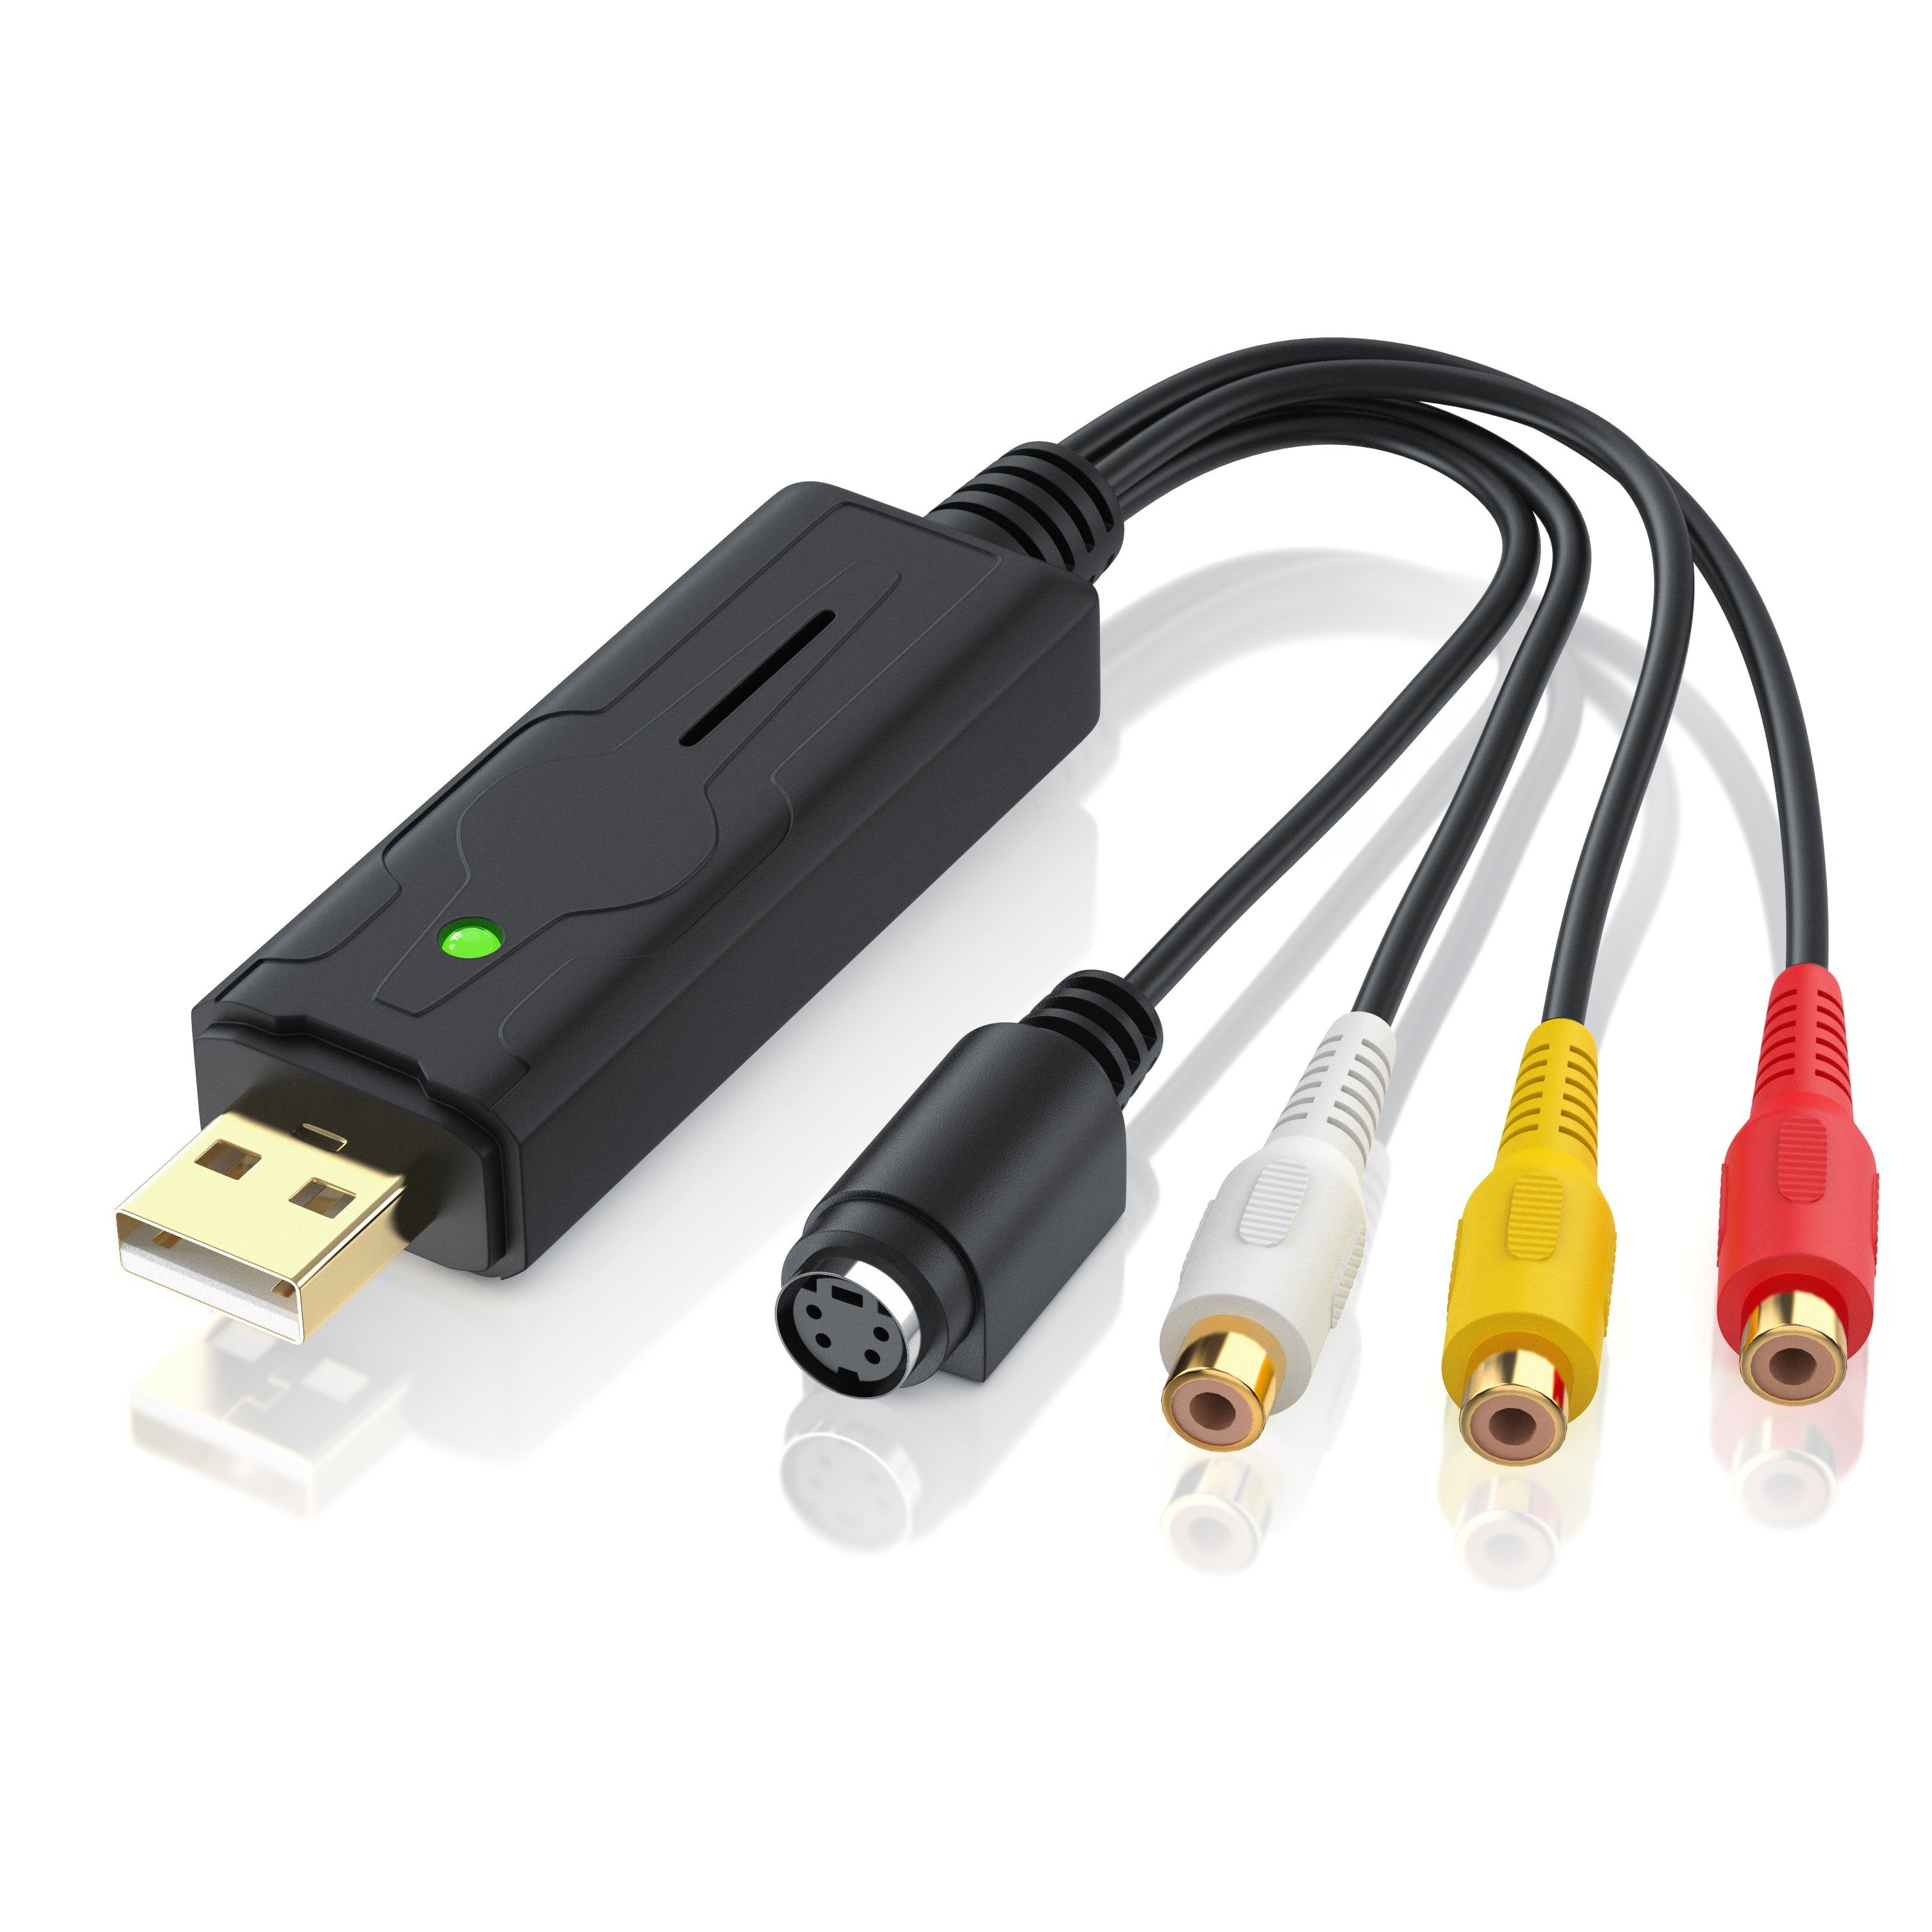 Aplic Audio- & Video-Adapter zu USB 2.0 Typ A, S-Video Buchse (Mini-DIN 4),